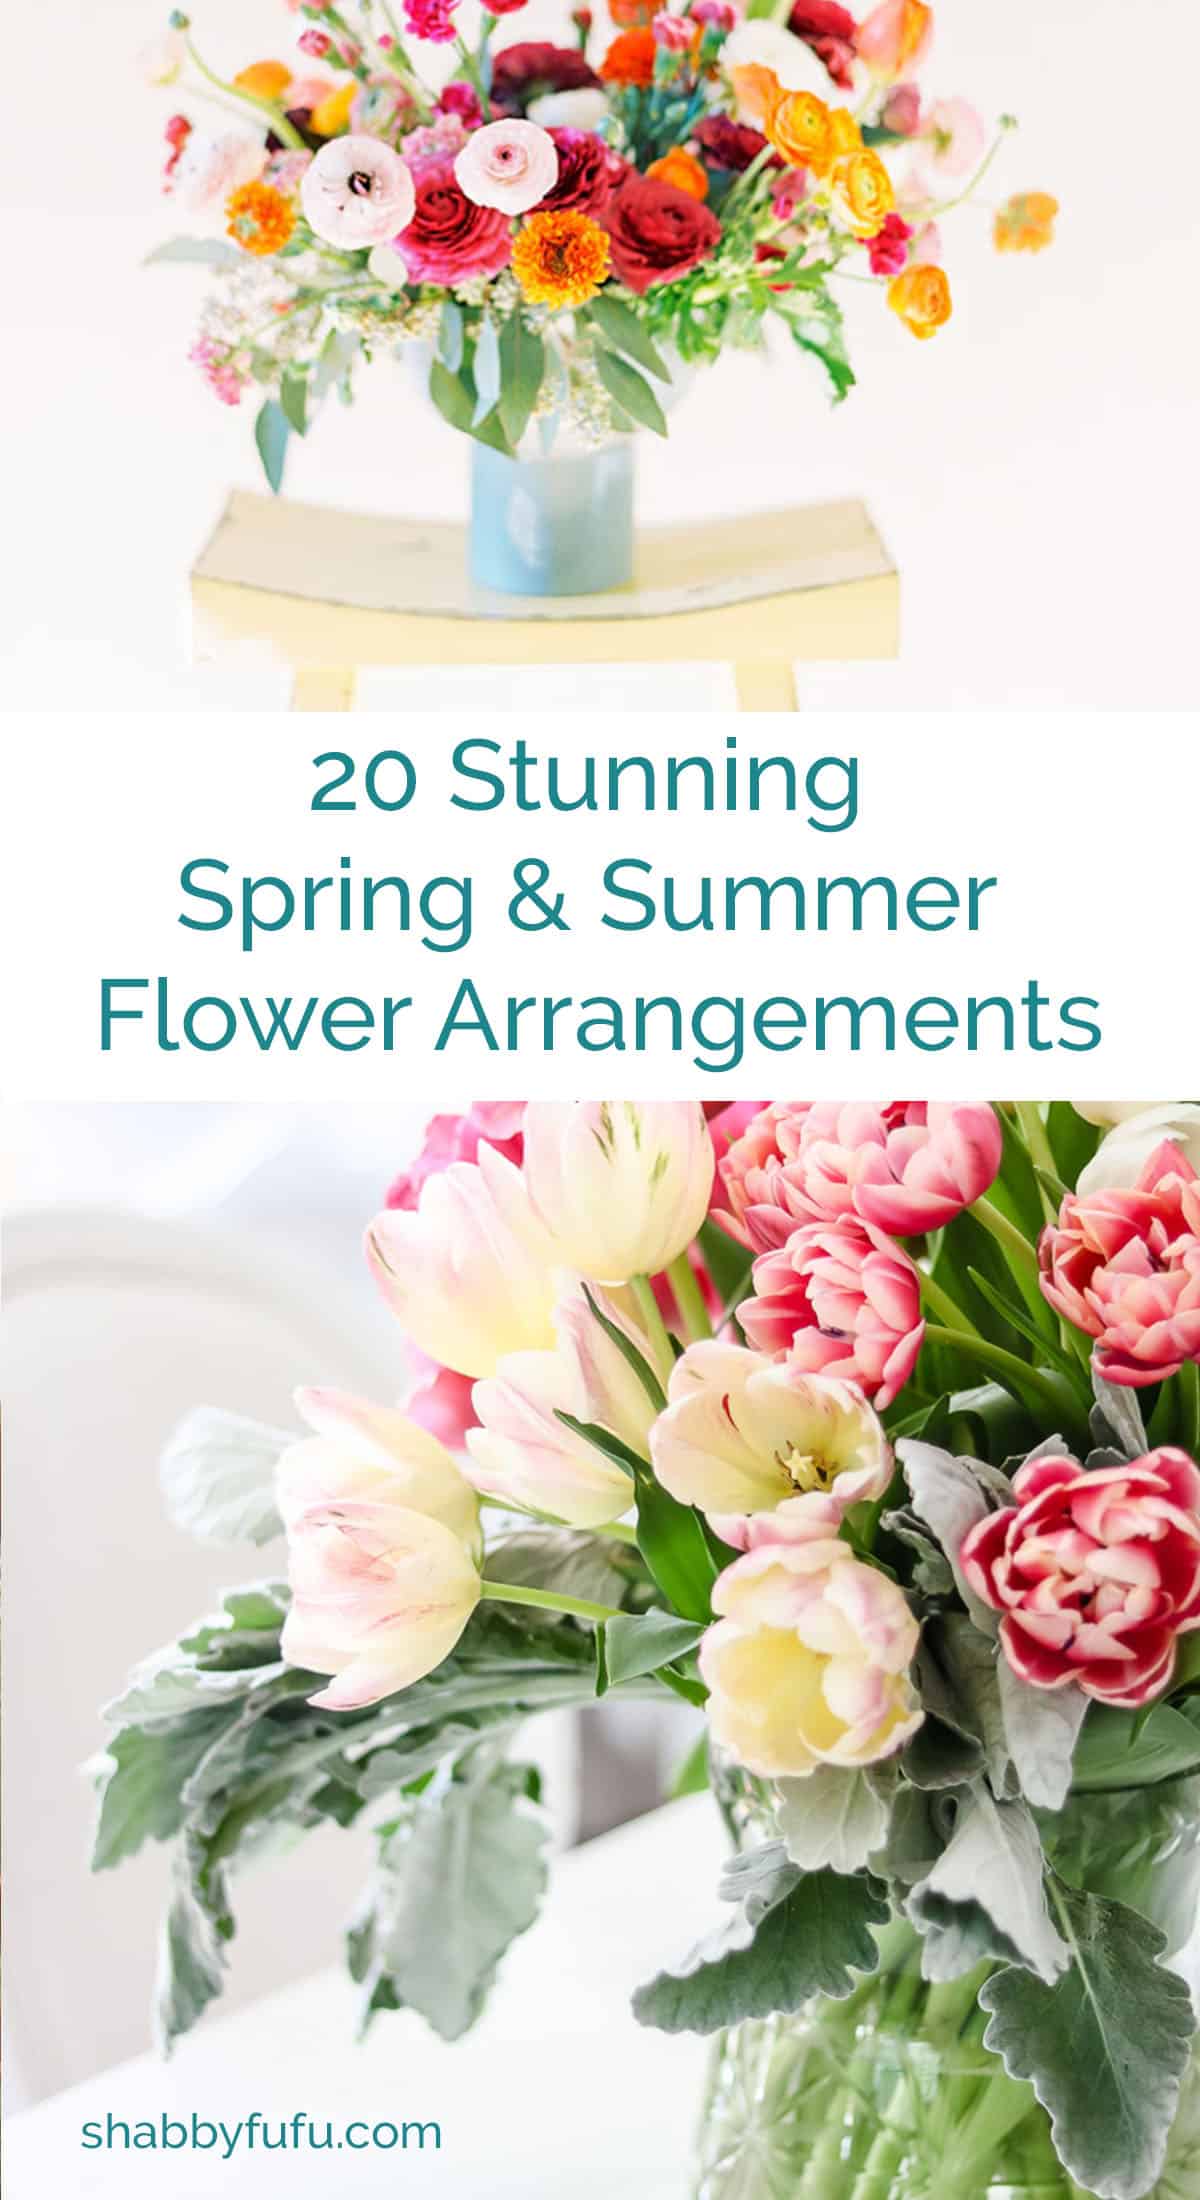 20 Stunning Spring & Summer Flower Arrangements - shabbyfufu.com